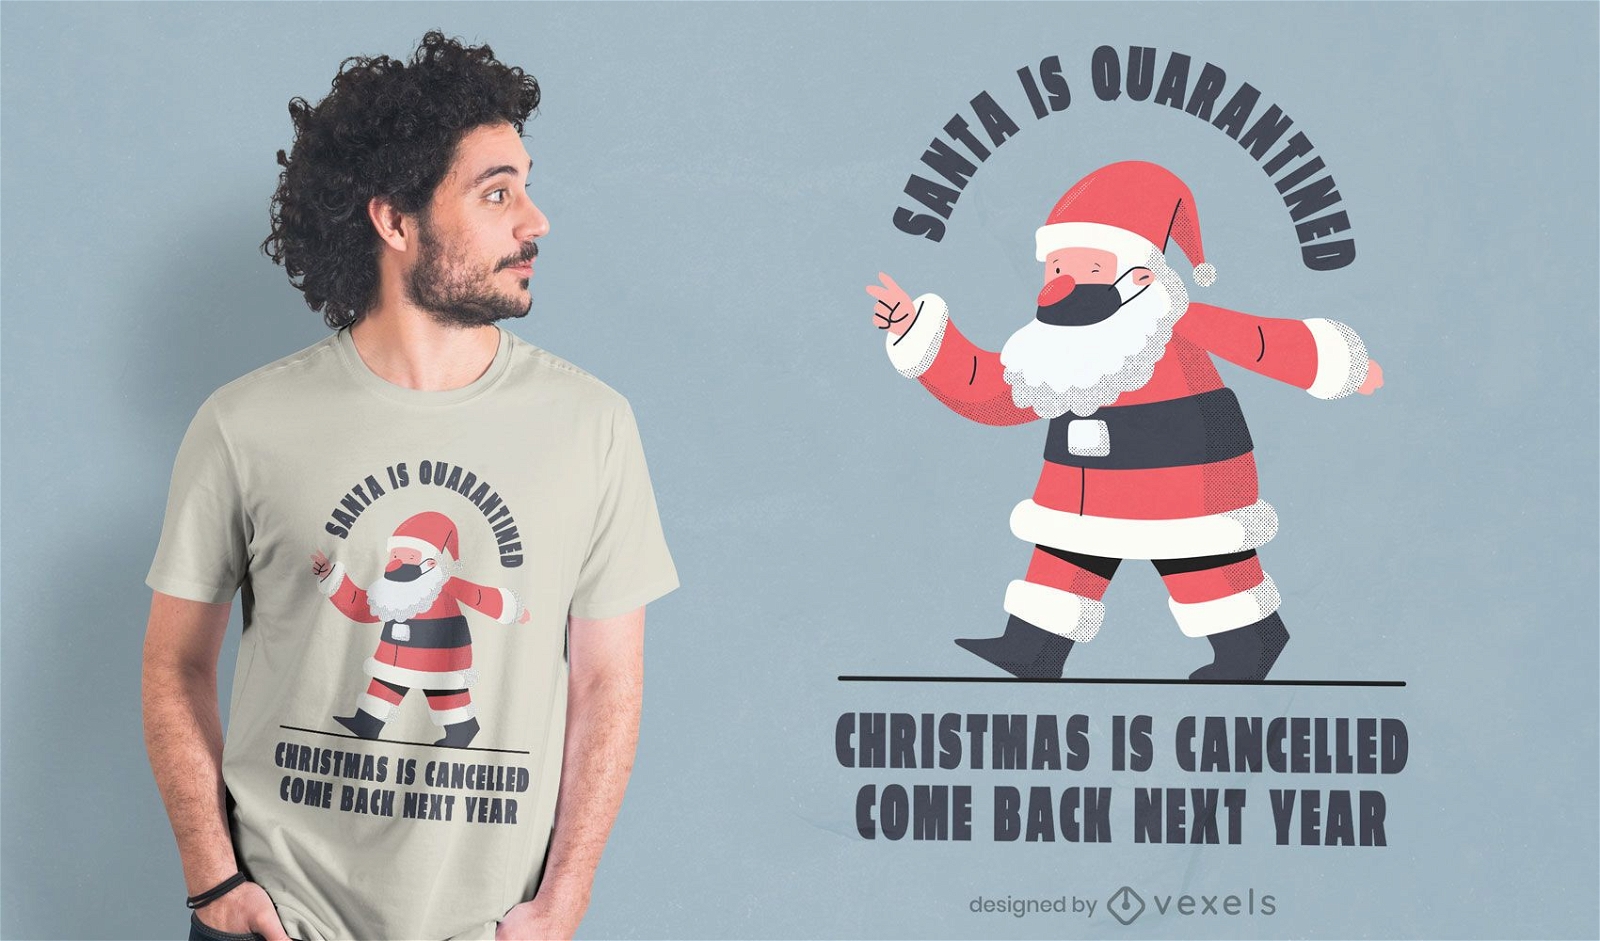 Cancelled christmas t-shirt design